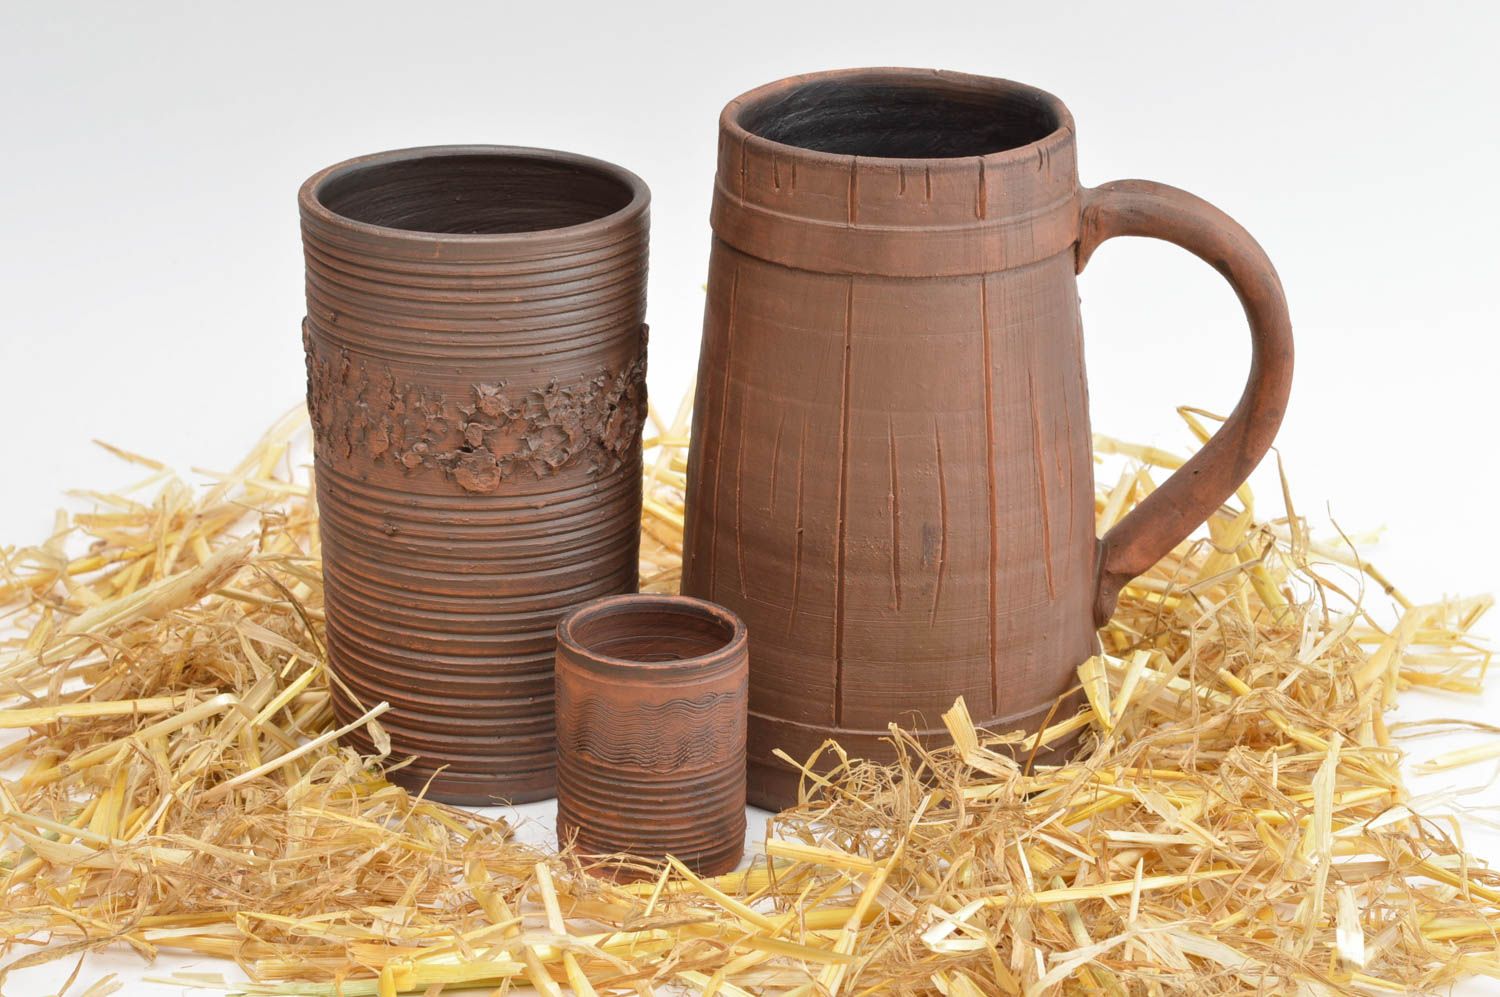 Ceramic tableware designer kitchenware eco-friendly dishes beer mug gift ideas photo 1